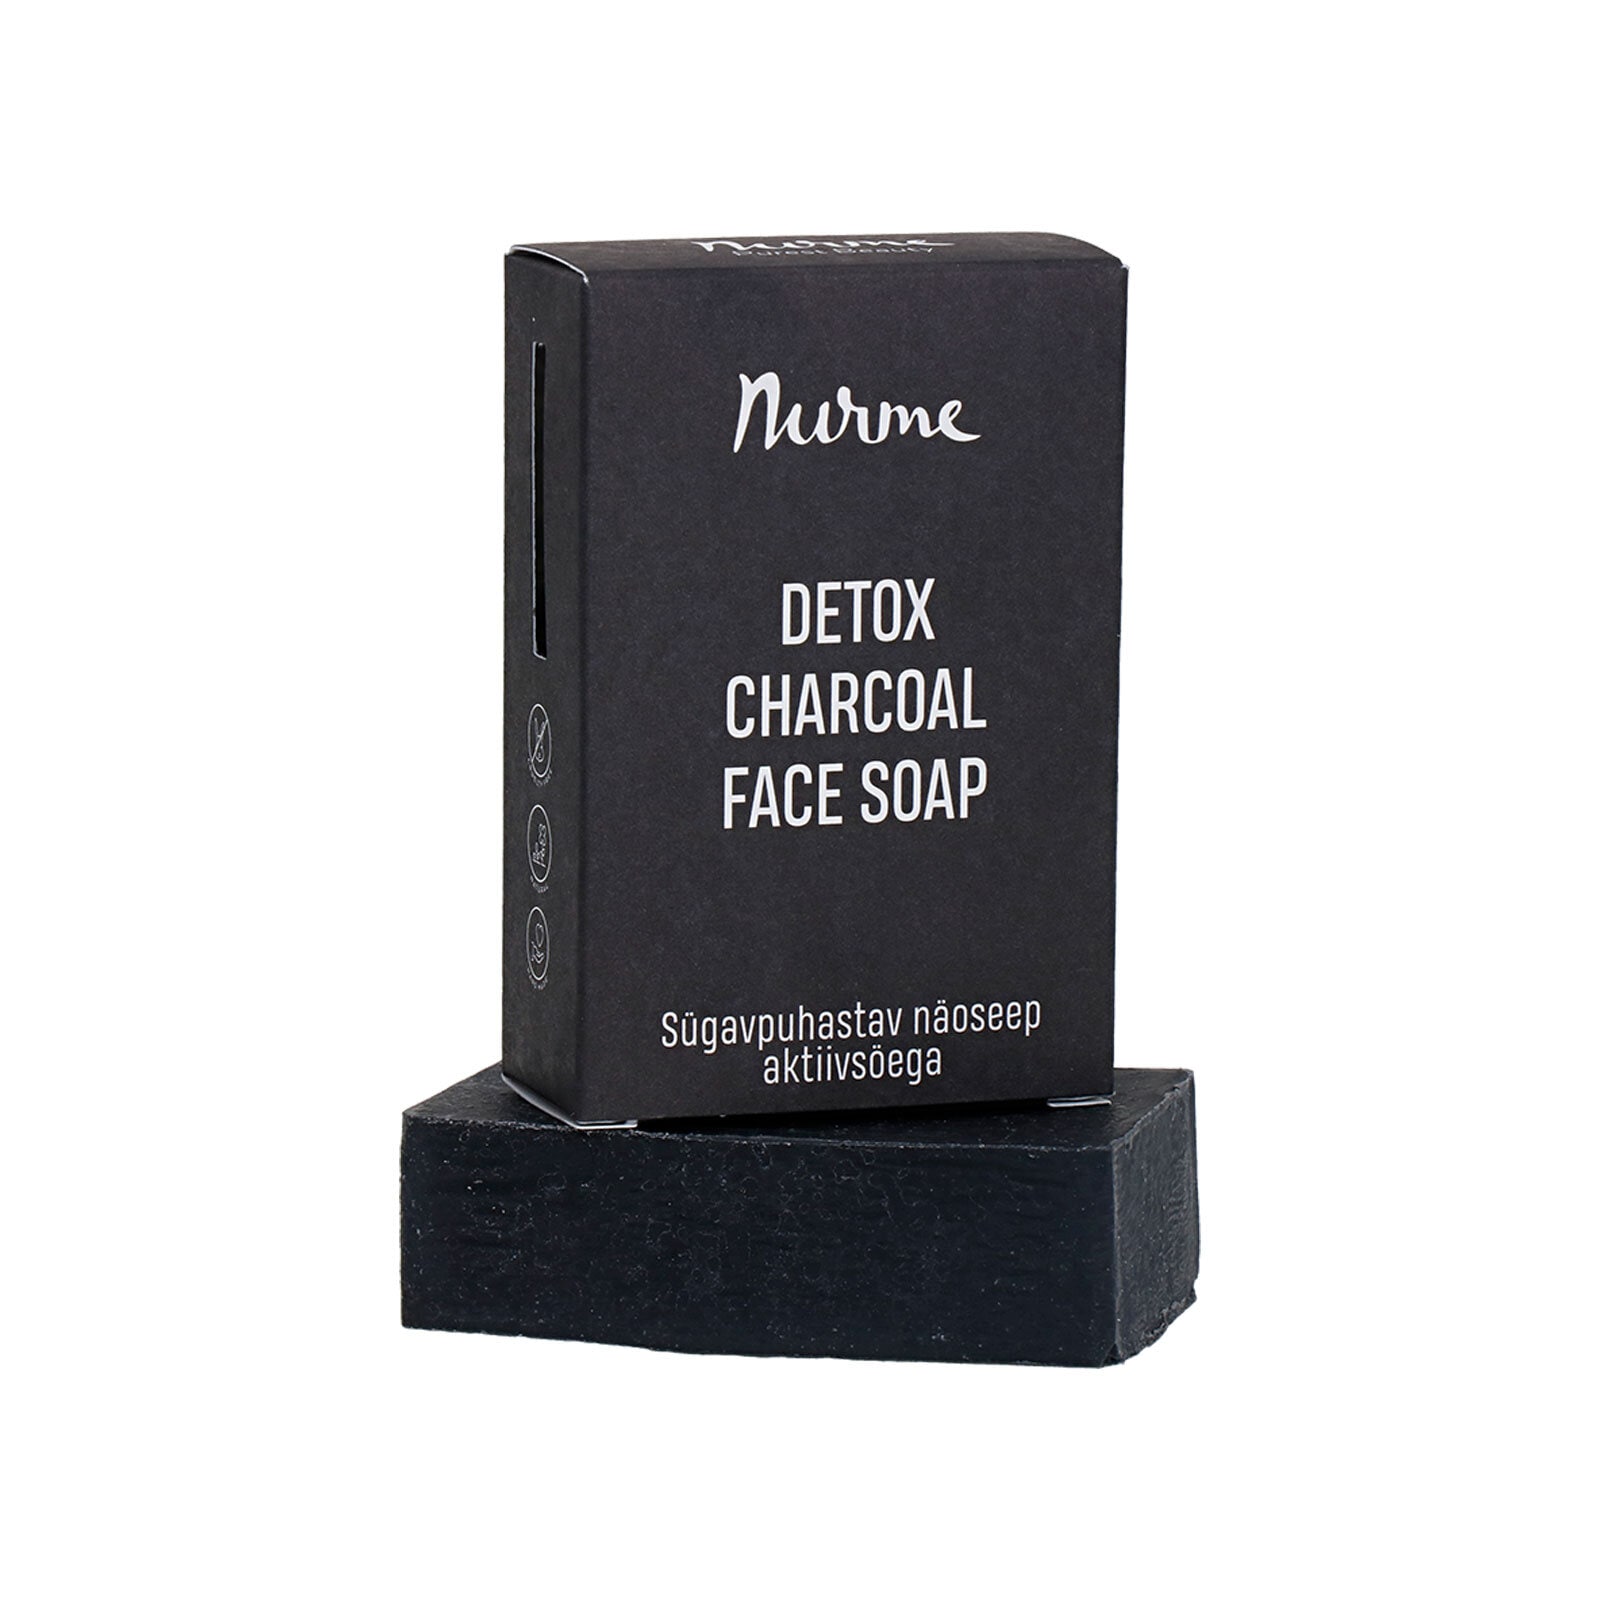 Nurme Detox Charcoal Face Soap Bar